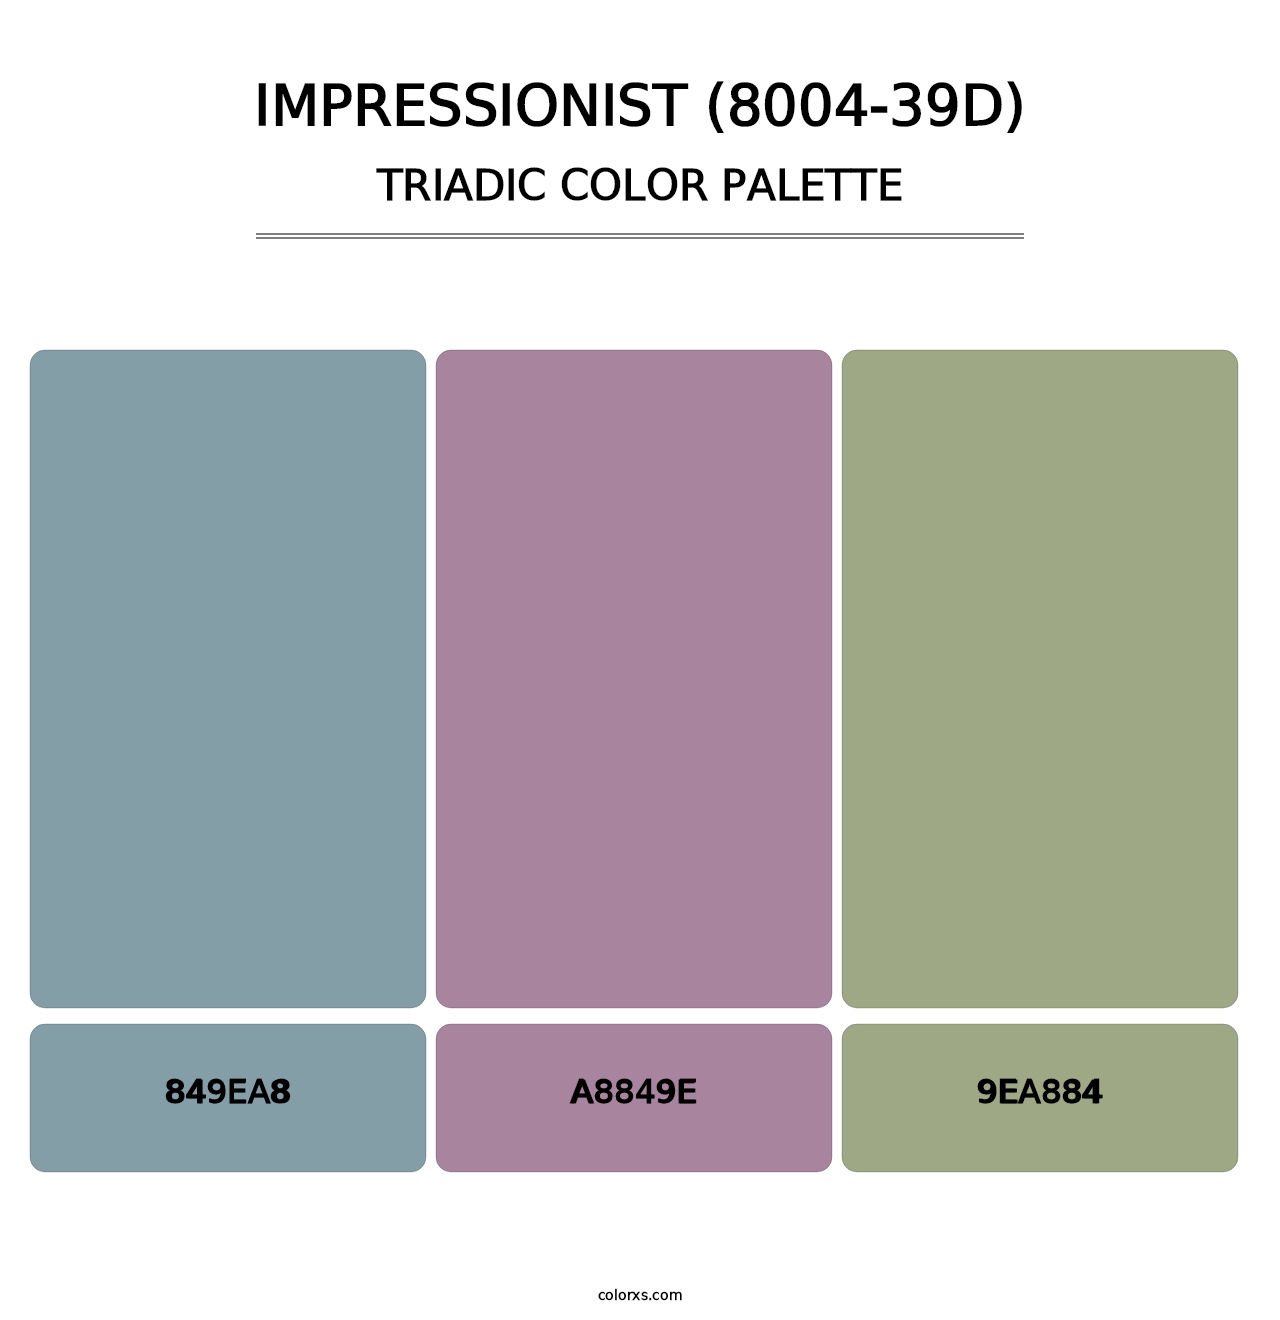 Impressionist (8004-39D) - Triadic Color Palette